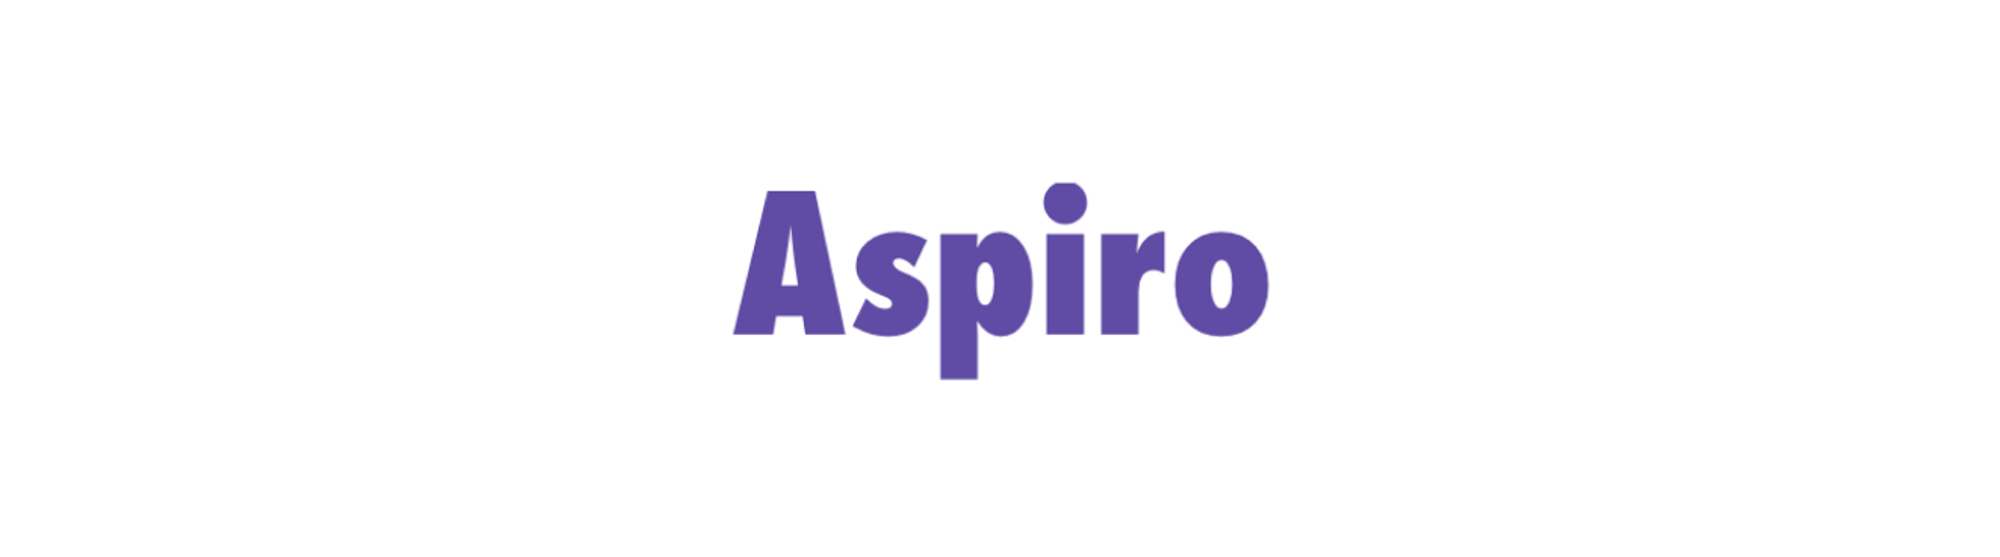 Aspiro Cover Image